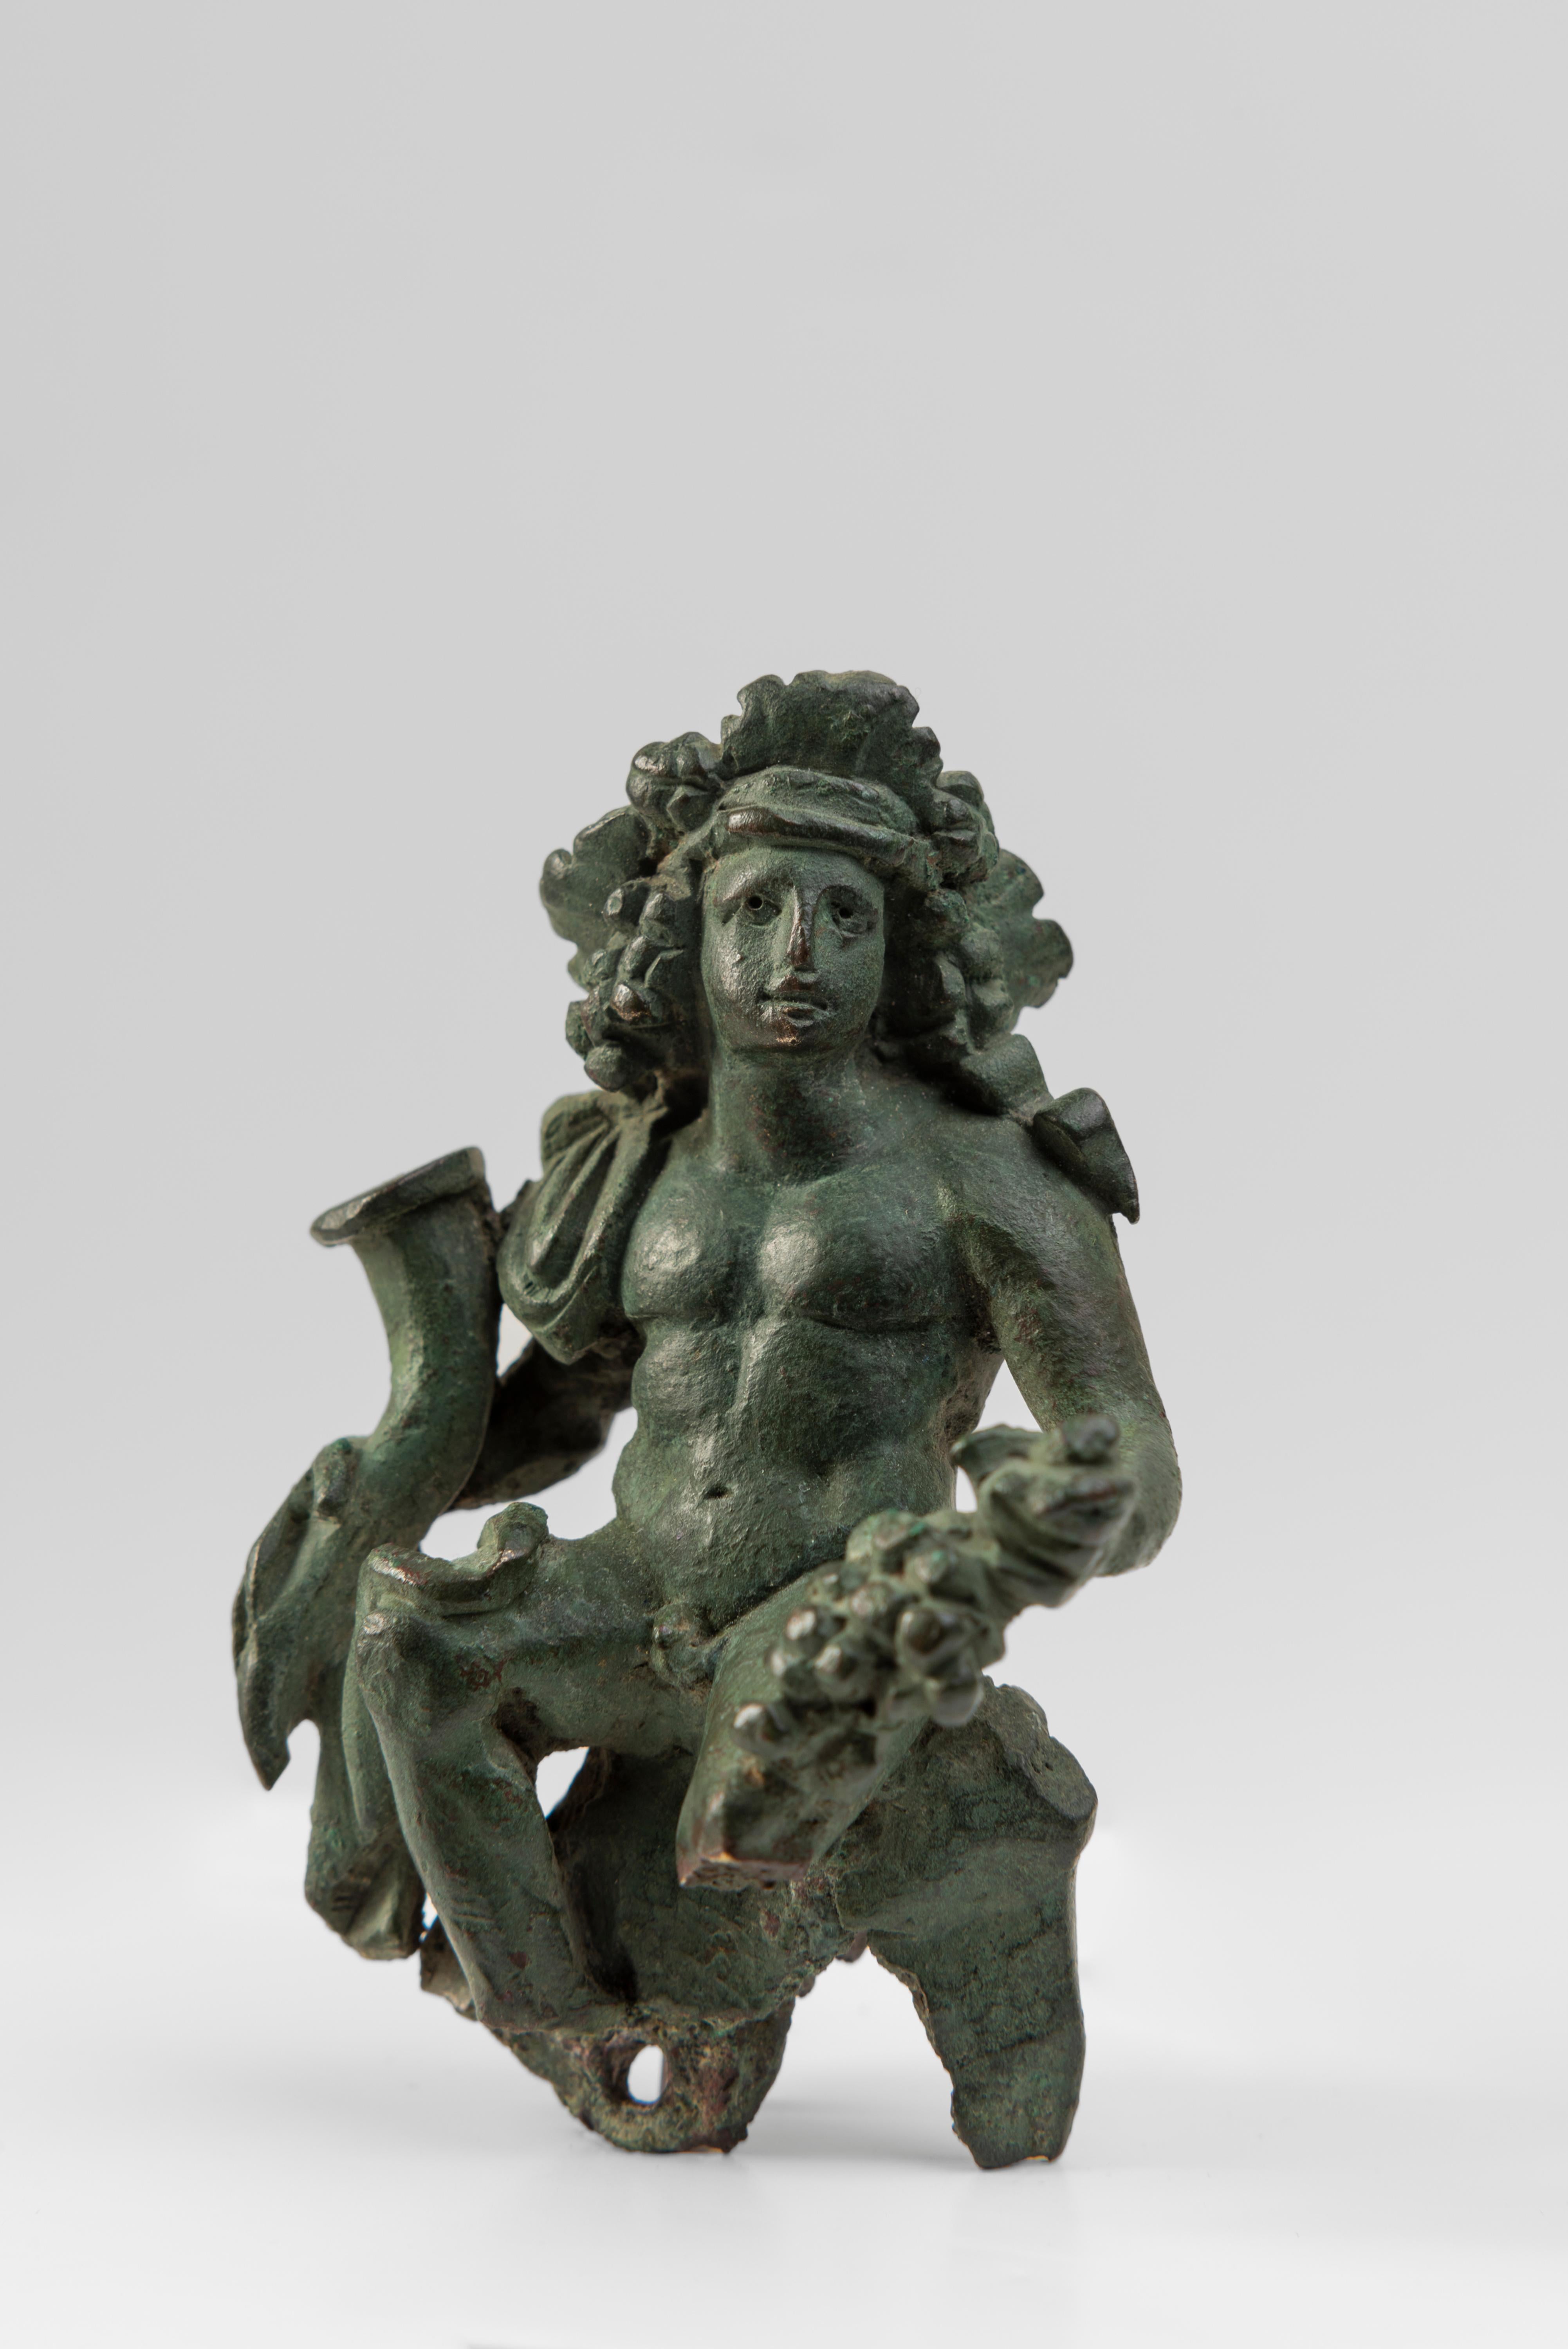 Unknown Figurative Sculpture - ANCIENT RARE BRONZE FIGURE OF DIONYSOS (BACCHUS) ROMAN EMPIRE 1ST CENTURY AD